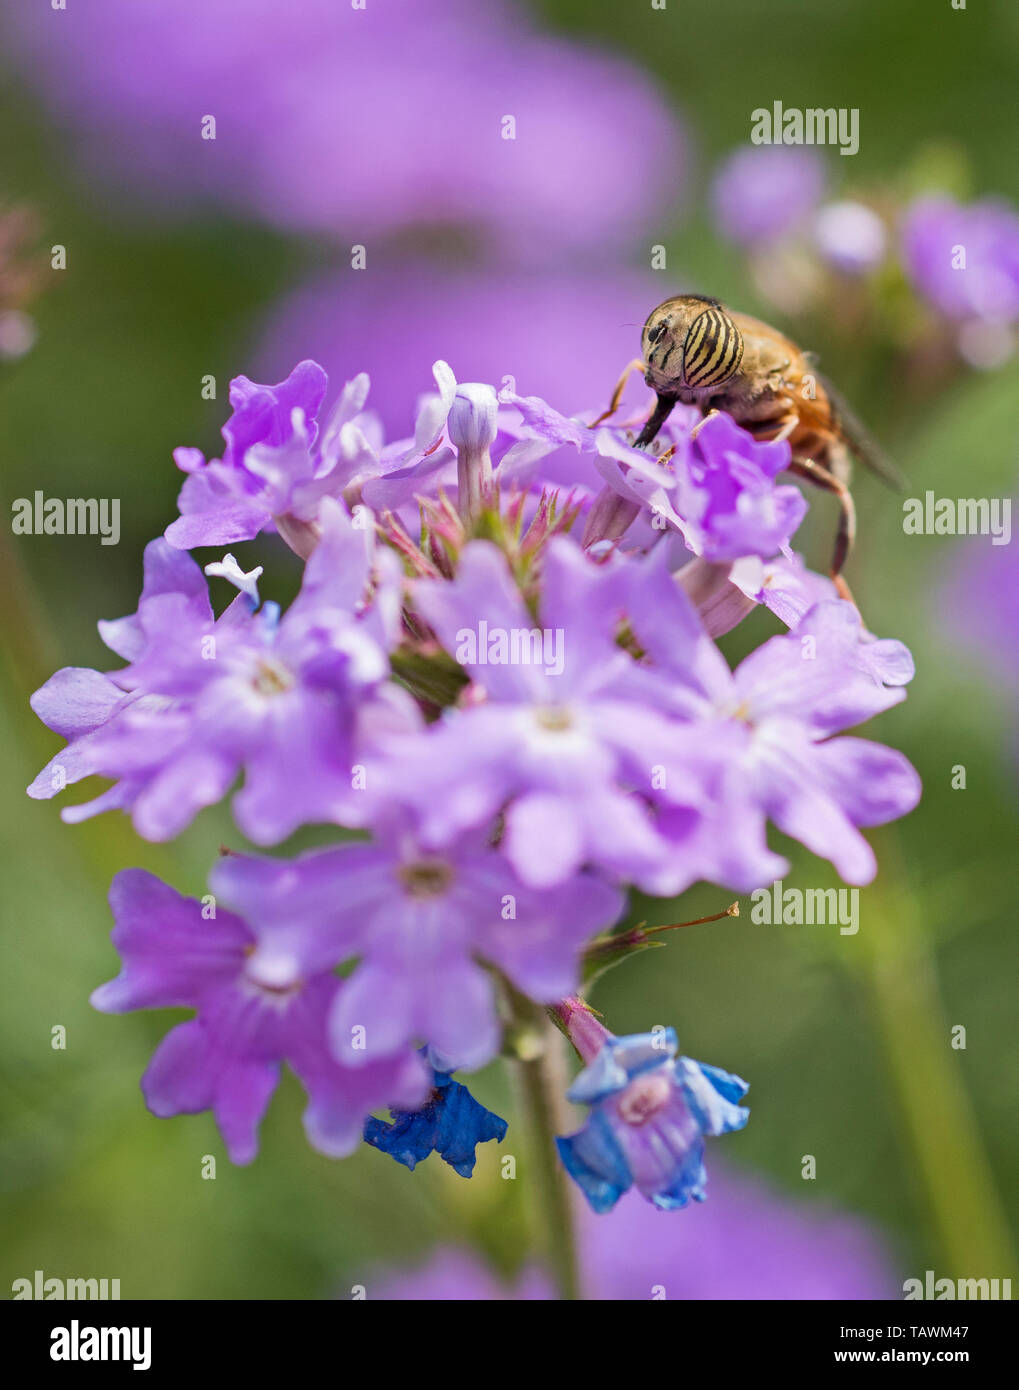 Close-up detail of a flower fly eristalinus taeniops feeding on purple Elizabeth Earle flowers Primula allionii in garden Stock Photo